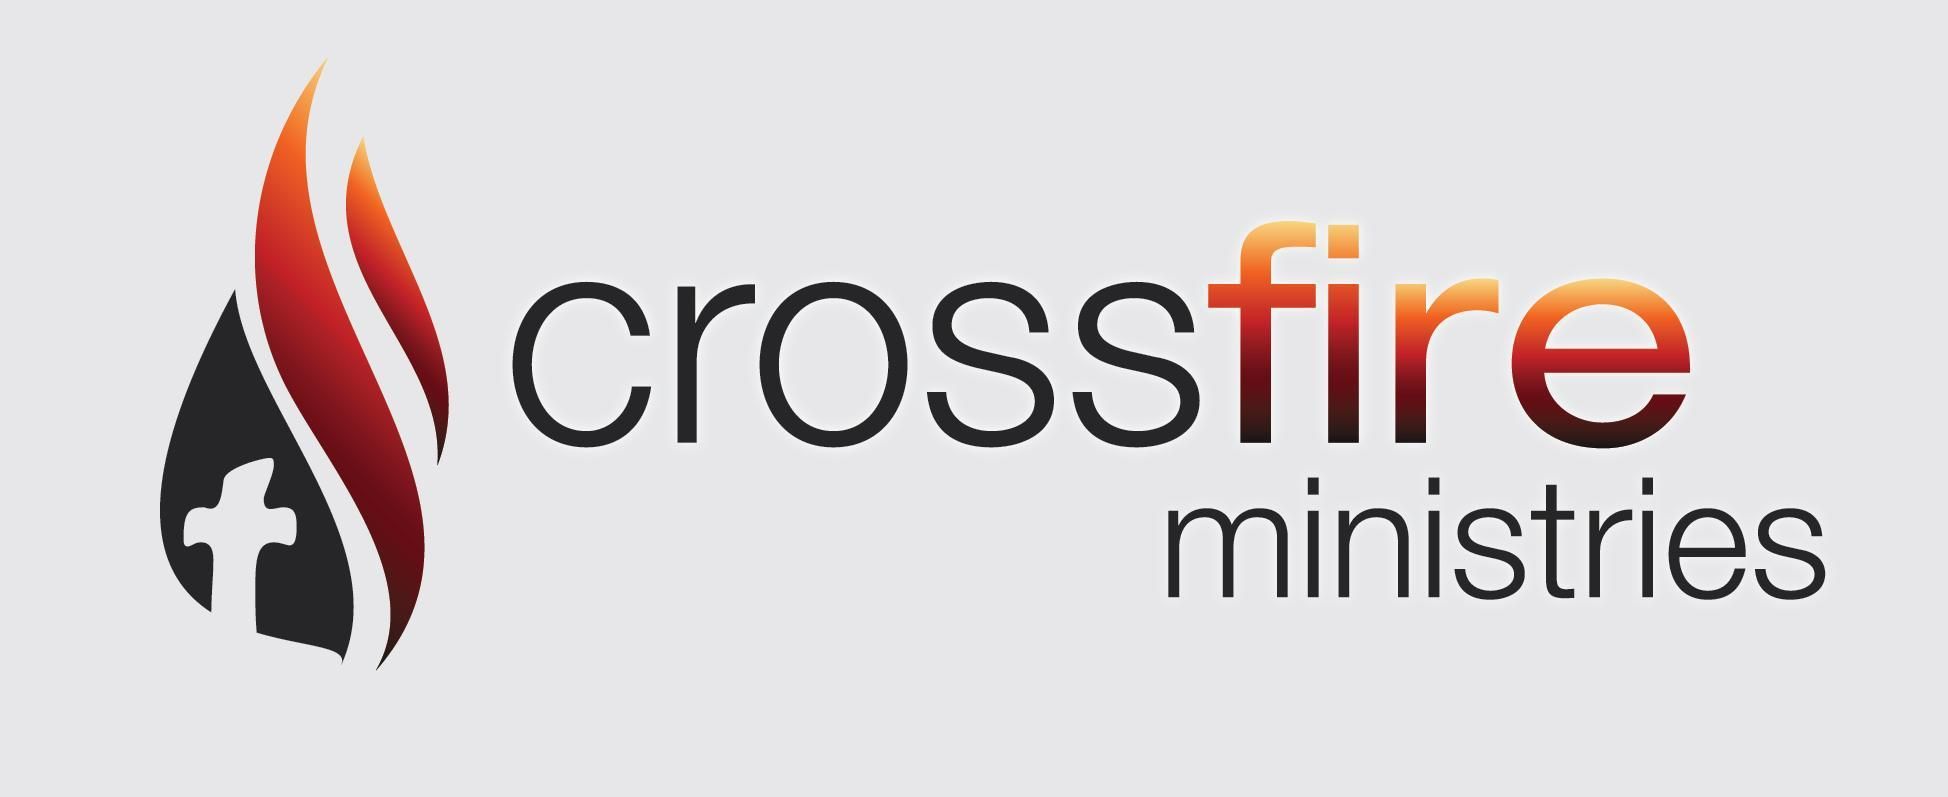 crossfire-ministries-branding-01